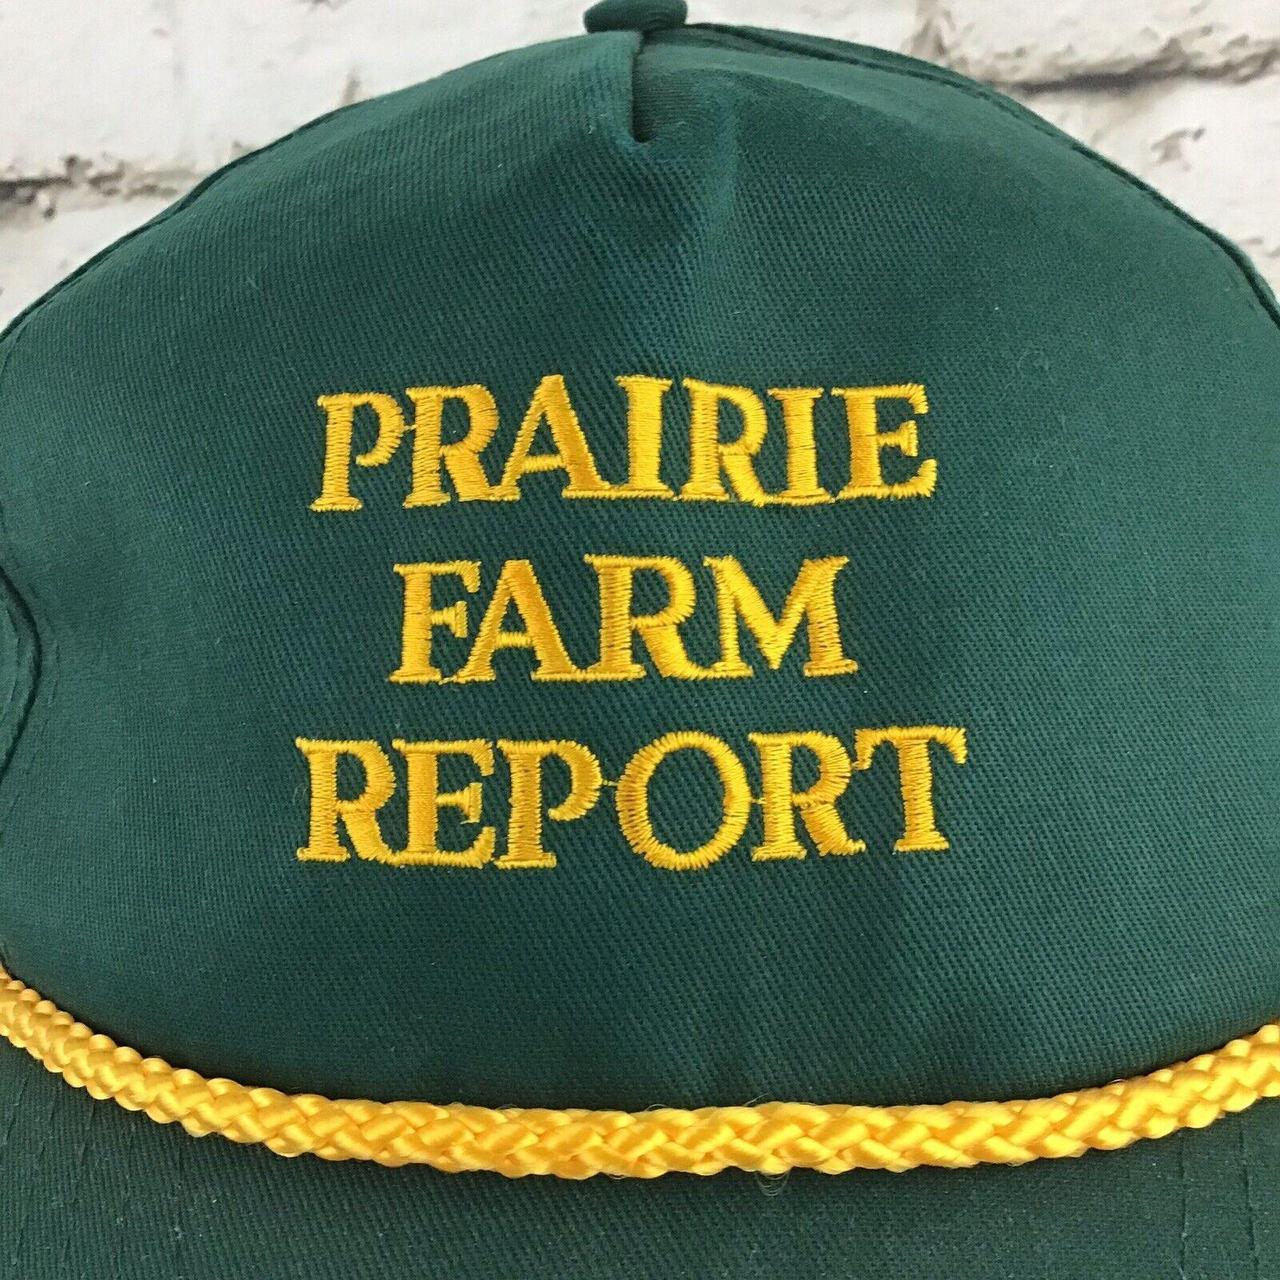 La Prairie Men's Green and Yellow Hat (2)